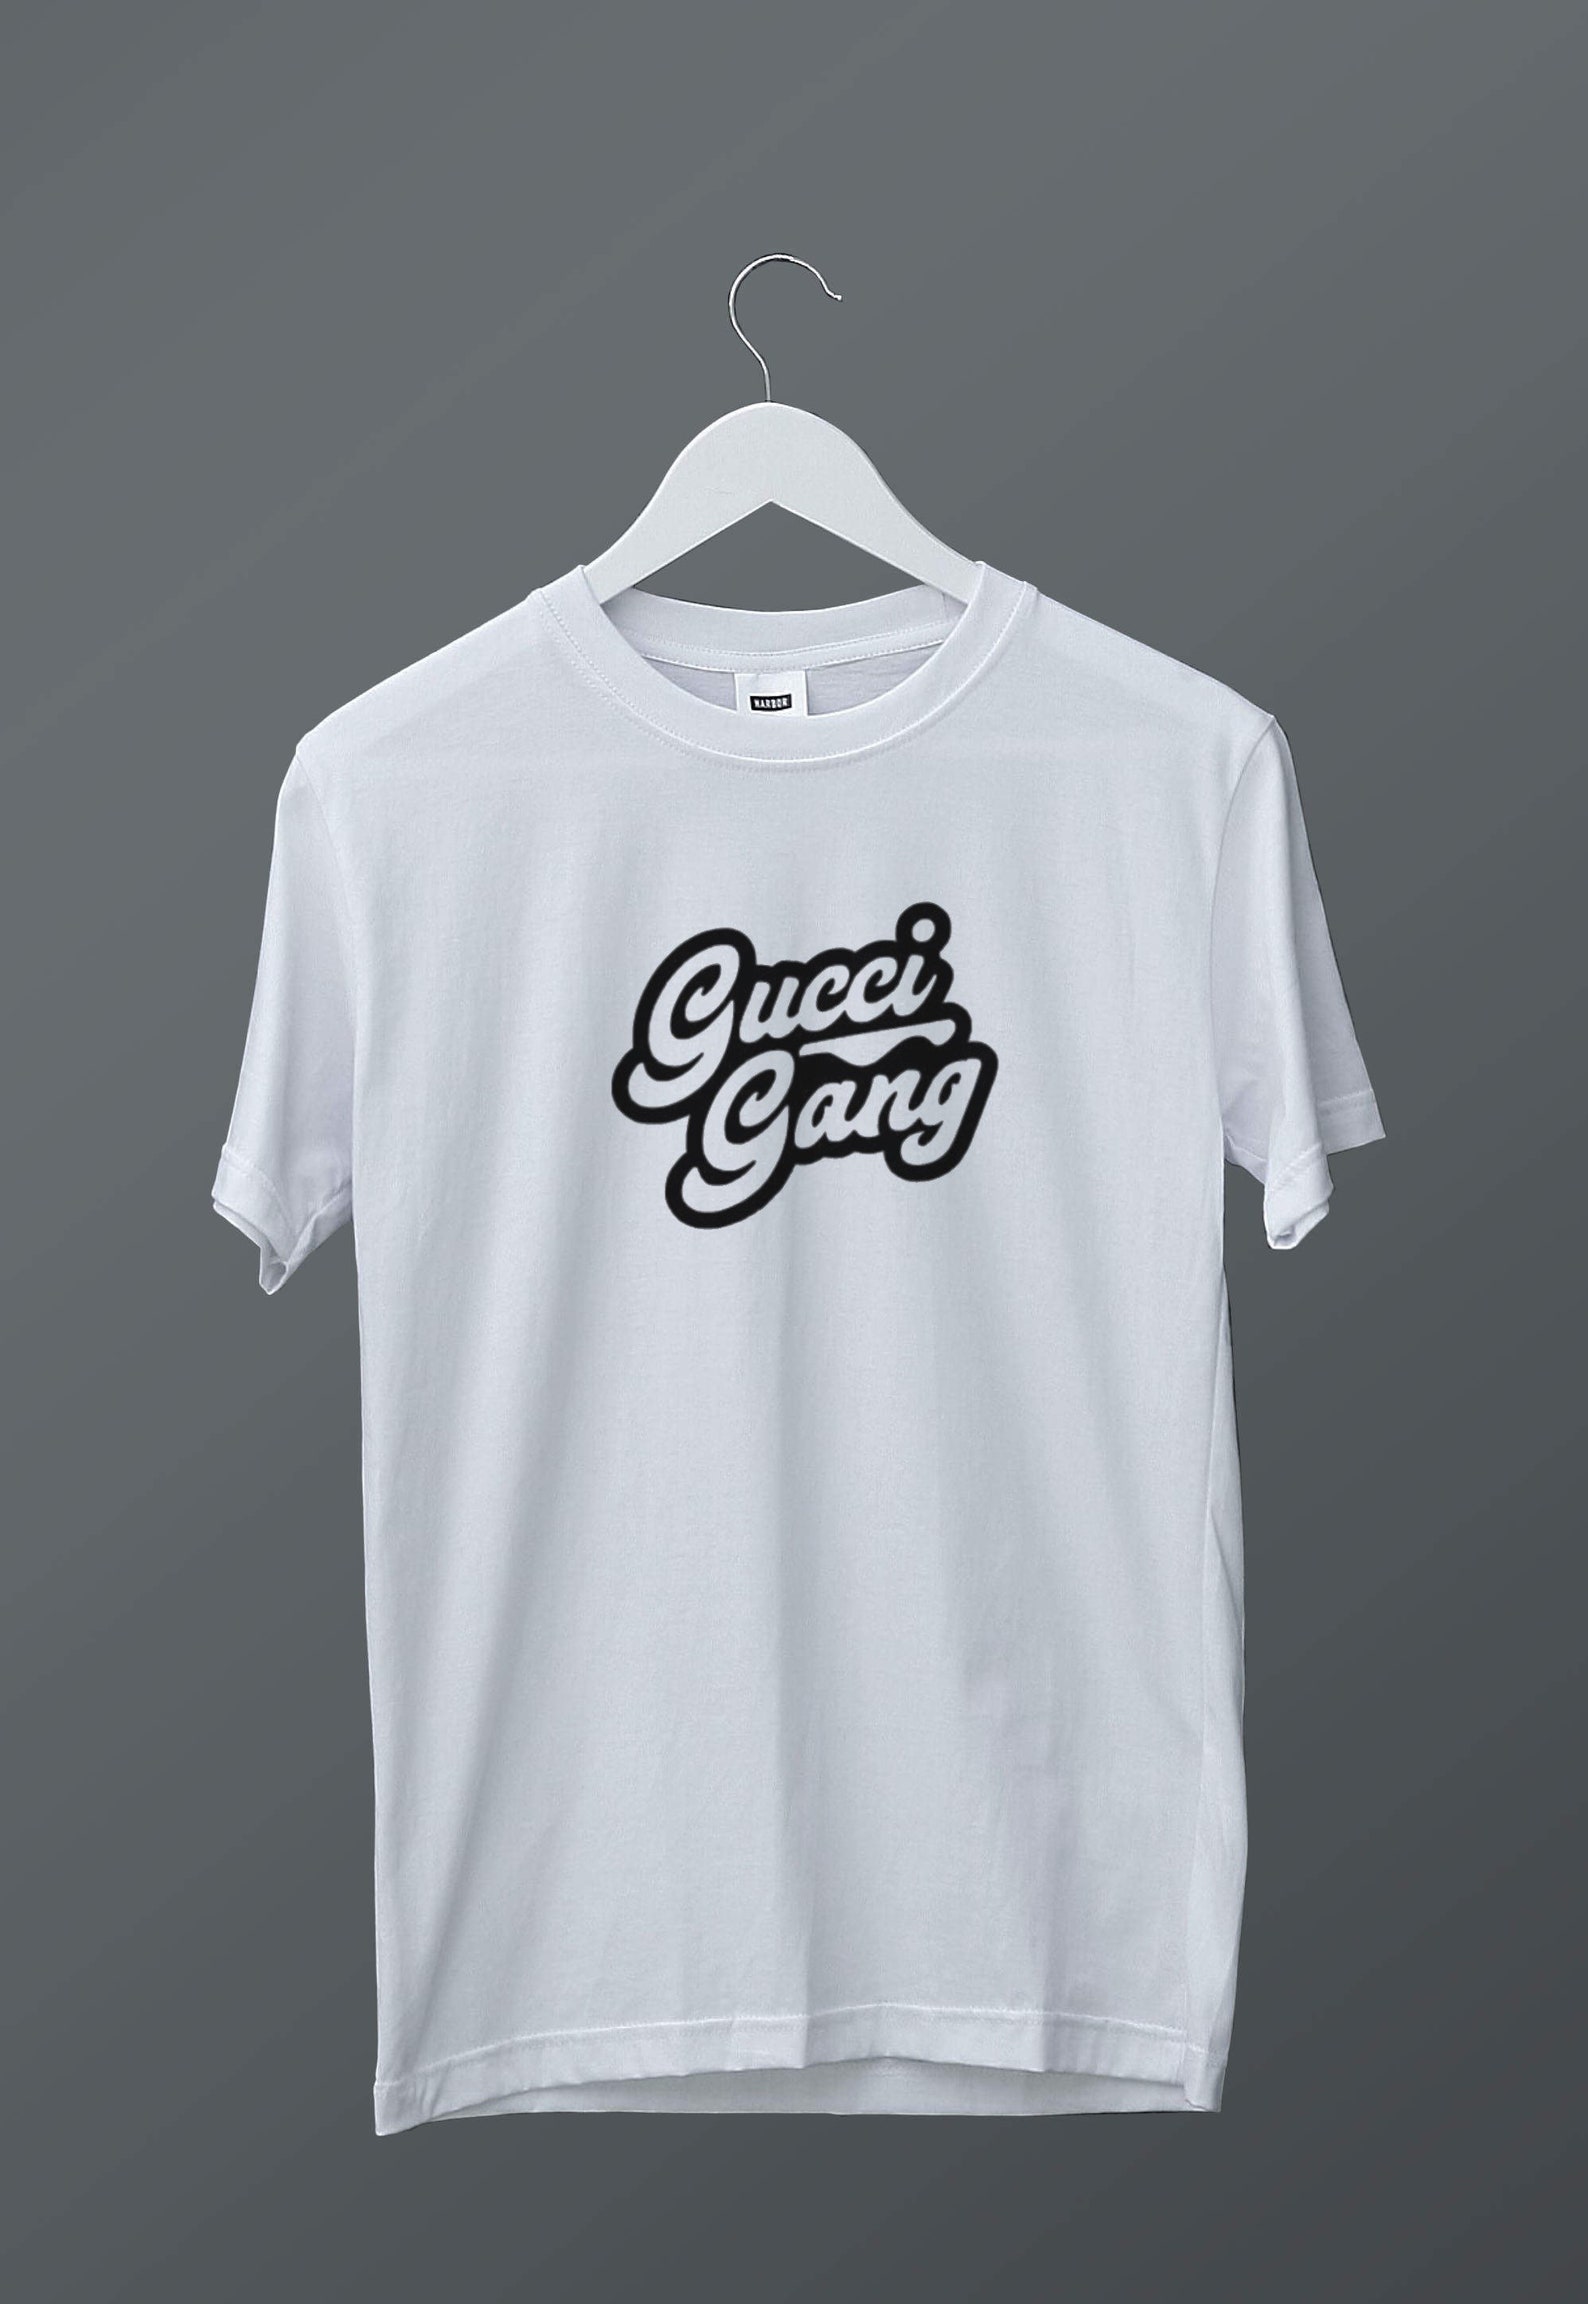 Gucci Gang drip logo T-shirt ships fast | Etsy